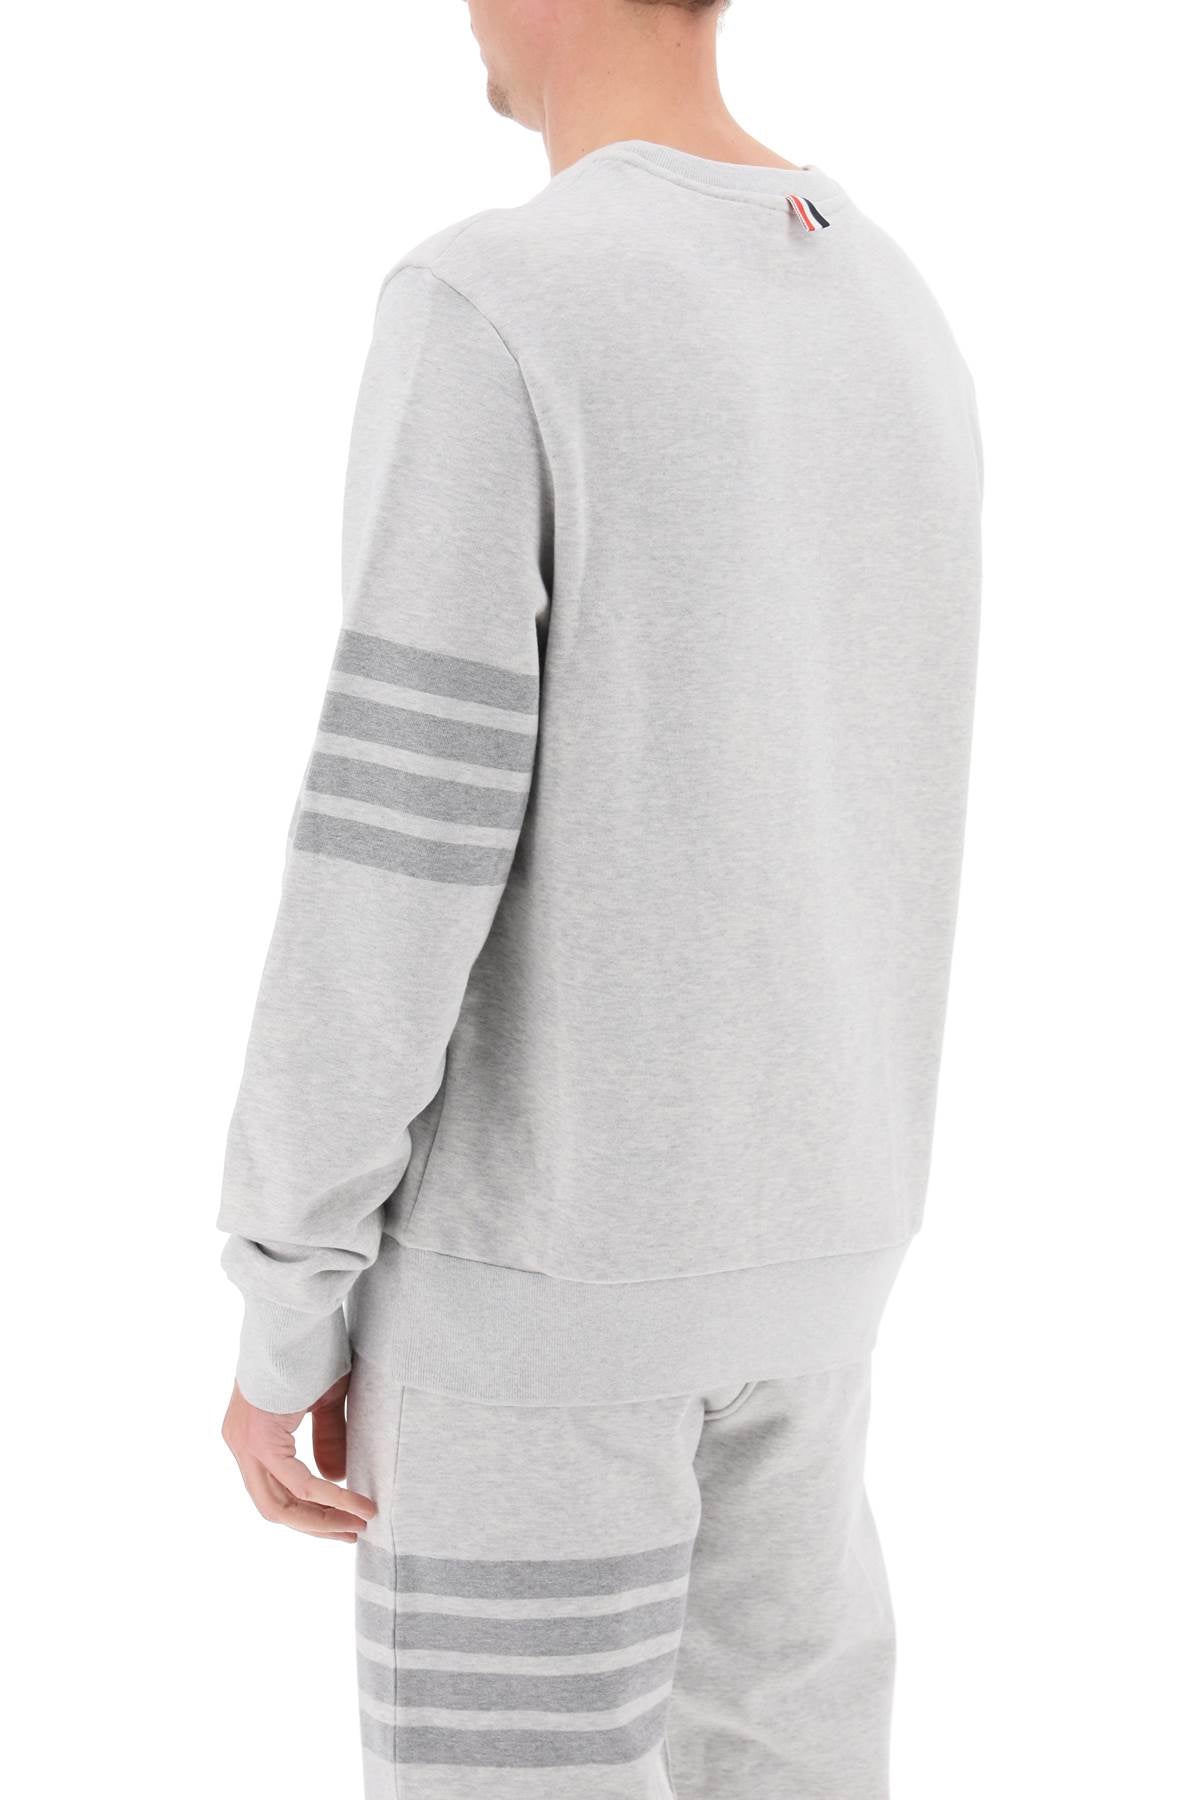 Thom browne cotton 4-bar sweatshirt-2